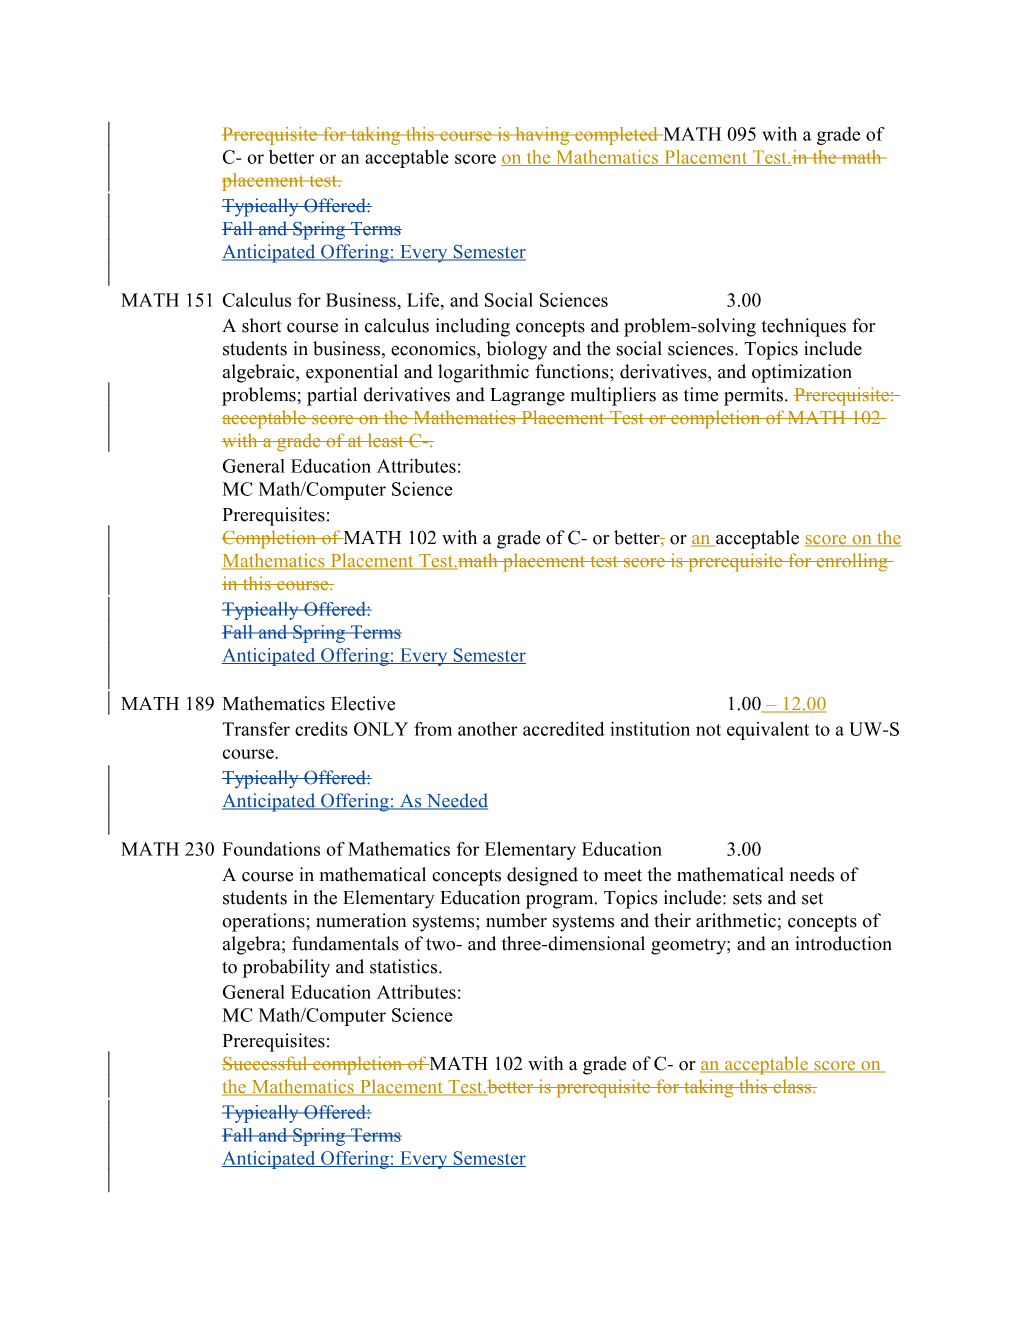 MATH - Mathematics - by Subject - Course Descriptions - 2012-14 - Catalog UW-Superior